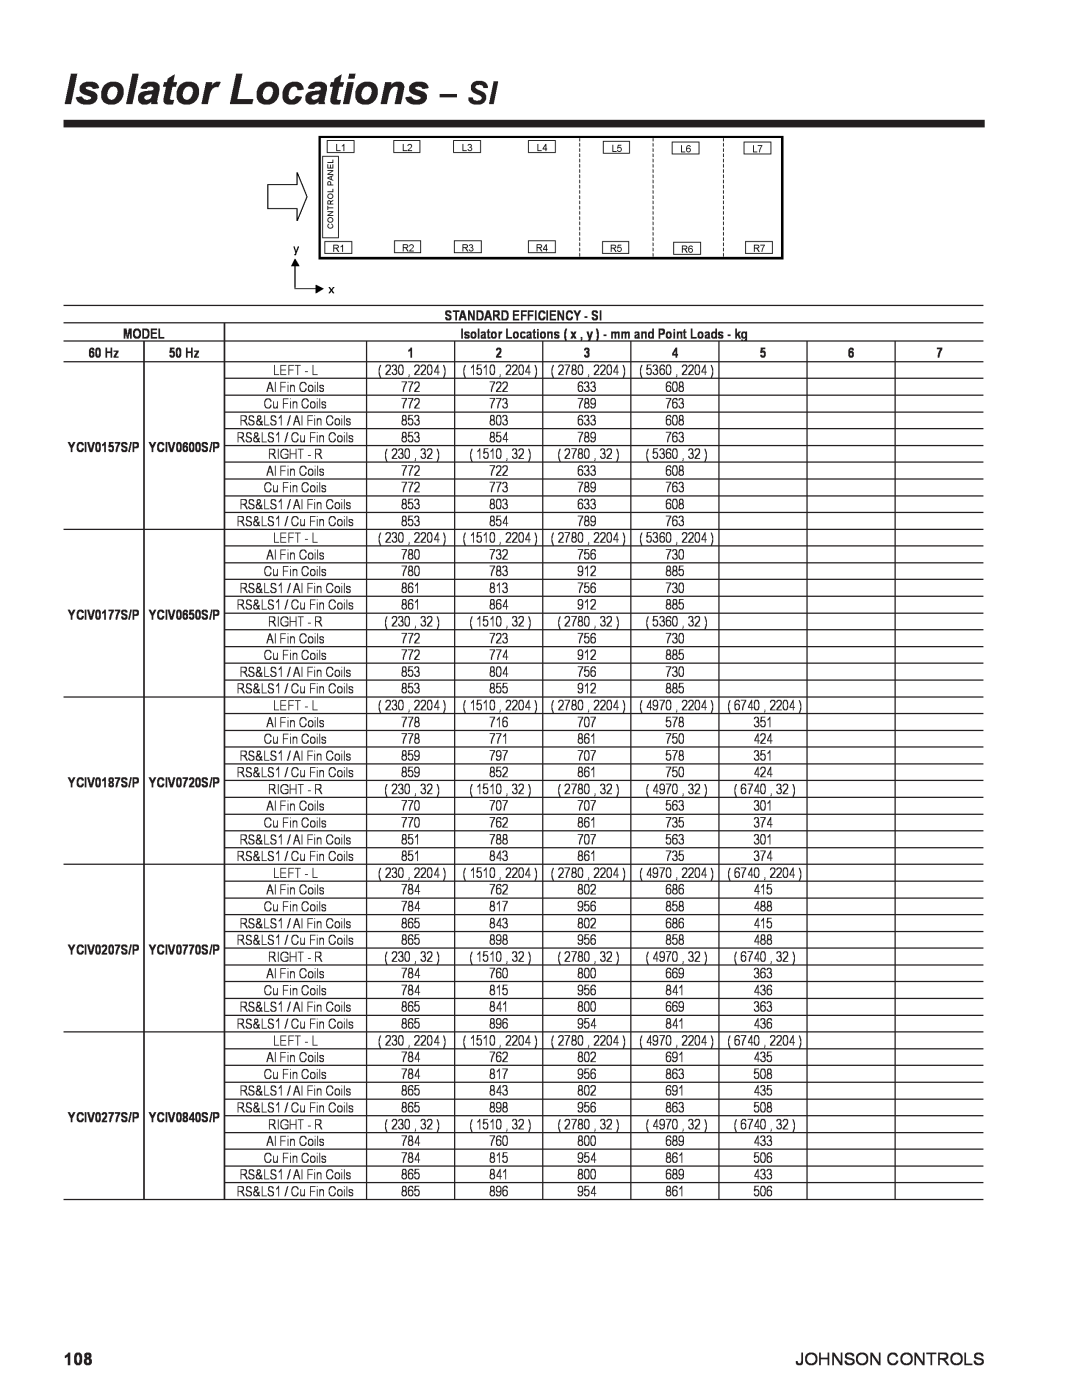 York R134A manual Isolator Locations – SI, Johnson Controls 